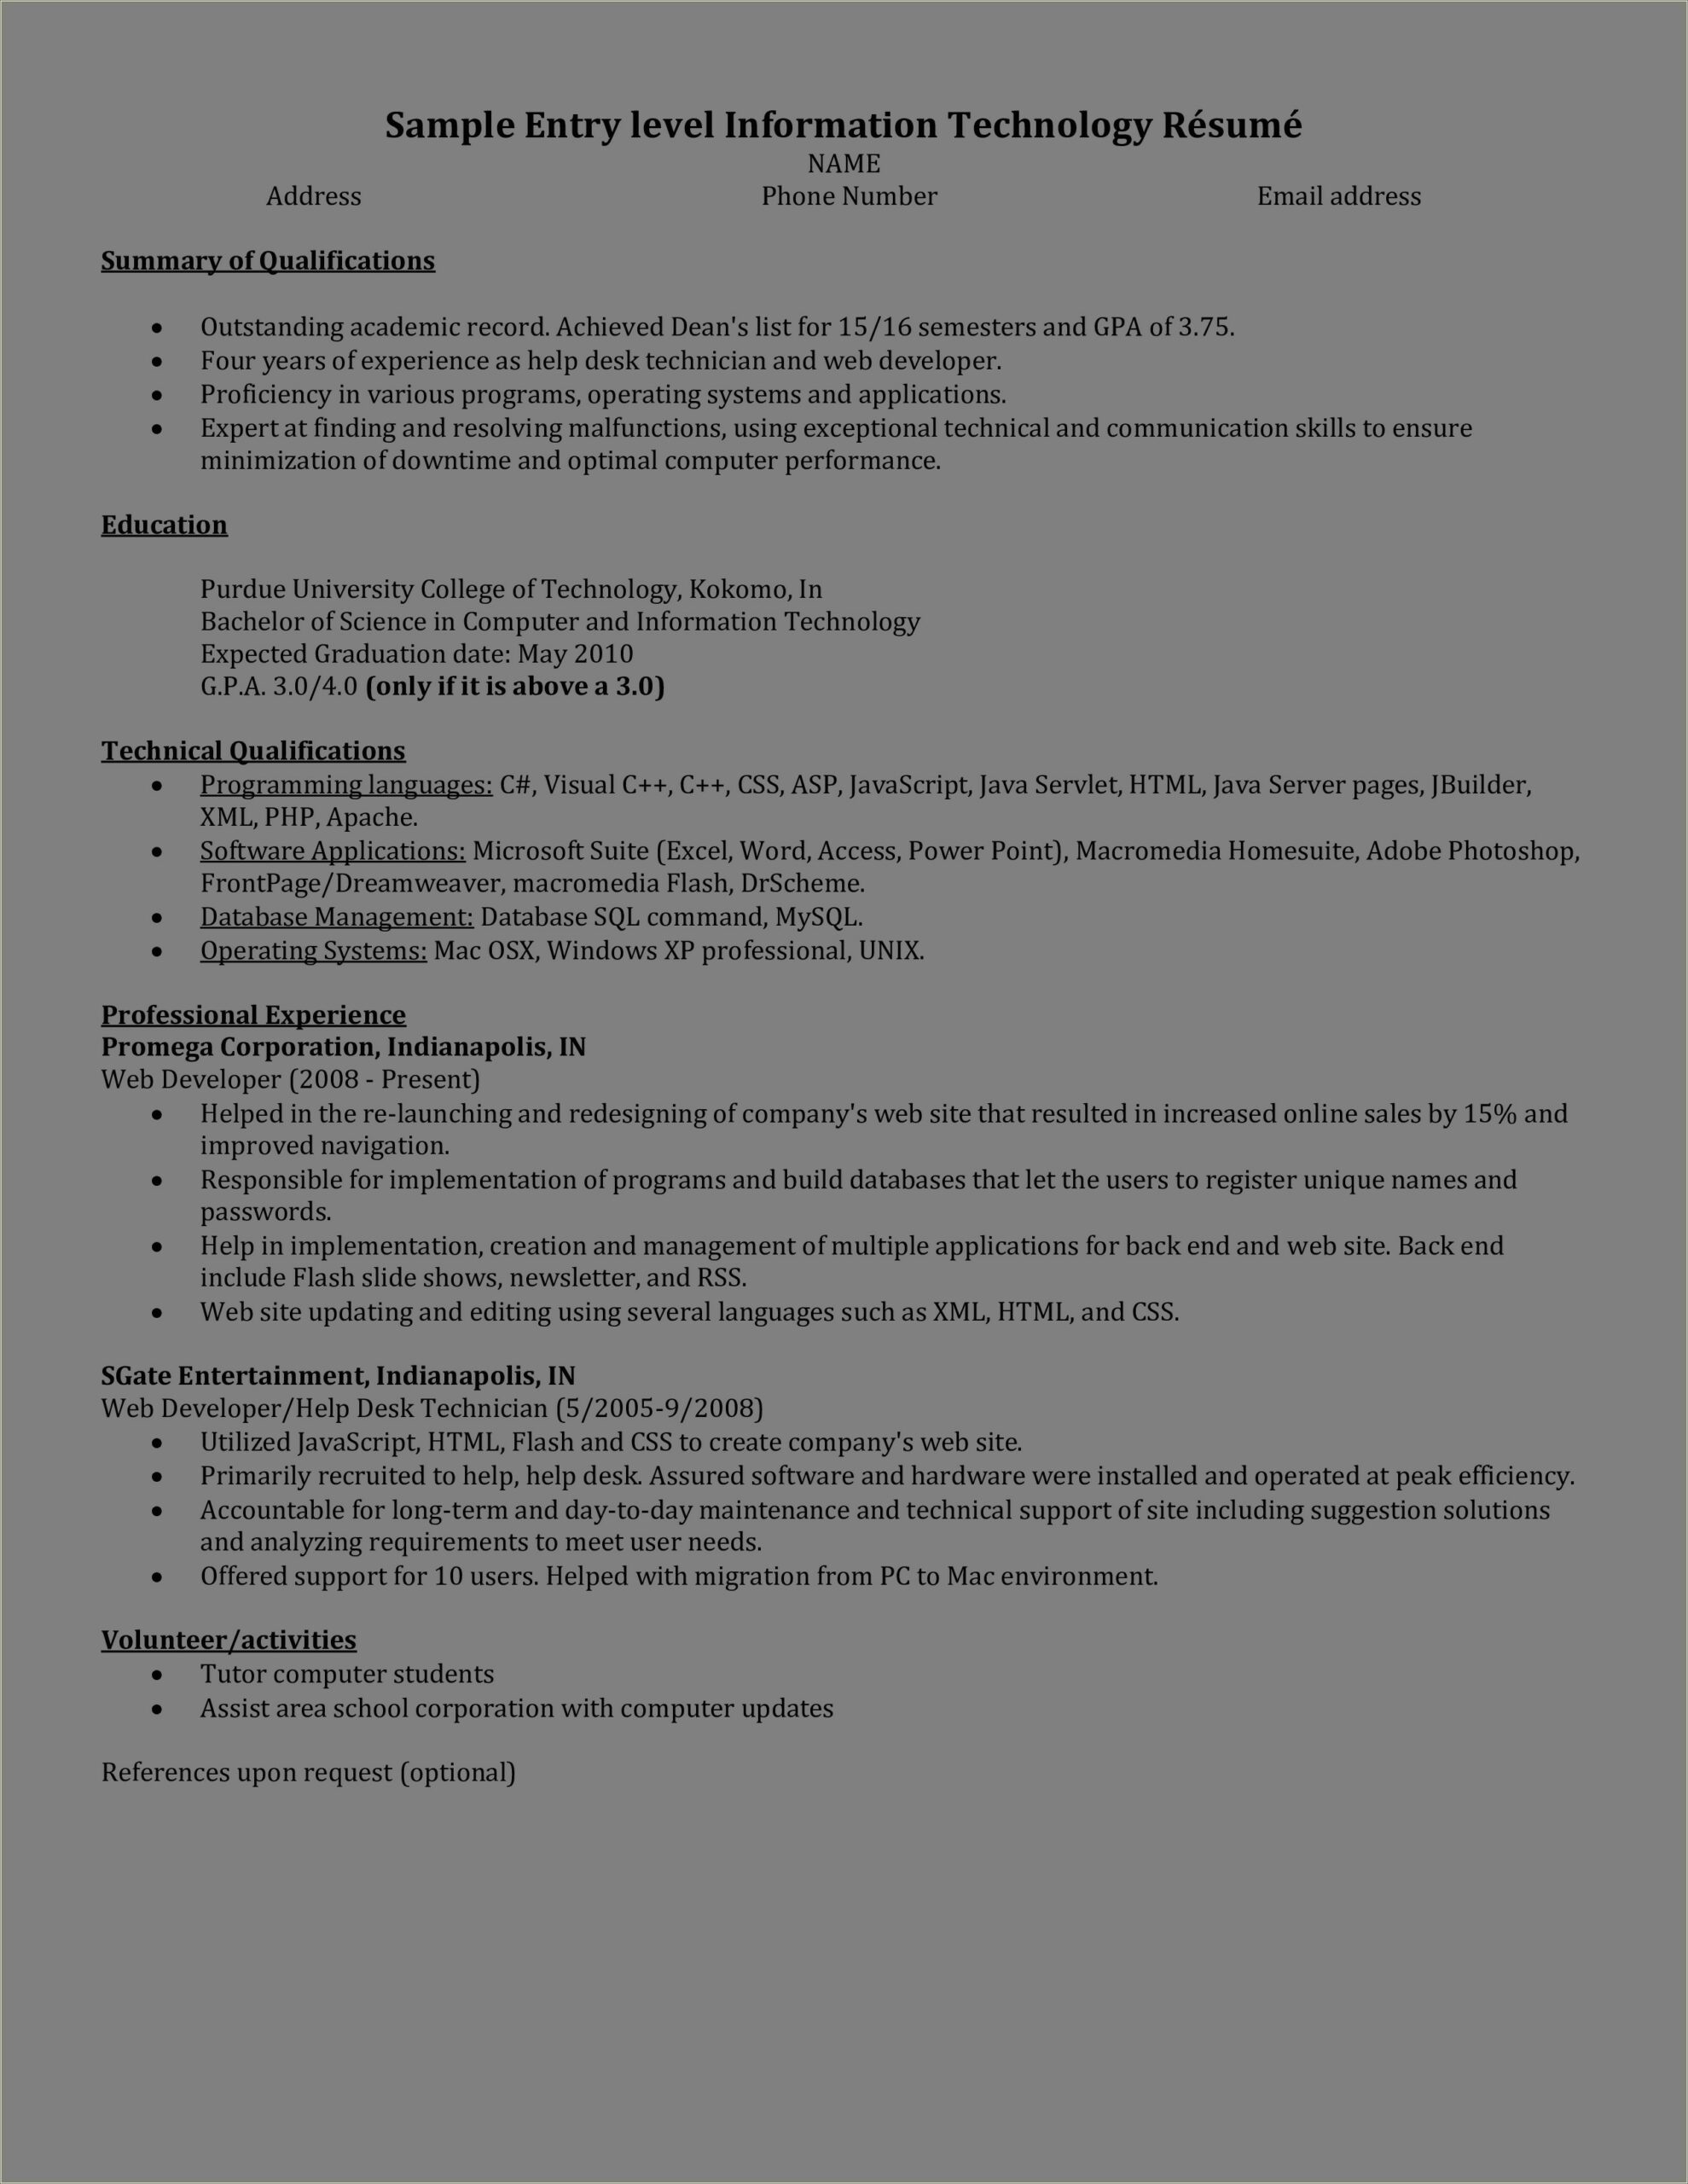 Sample Resume For Entry Level Computer Programmer